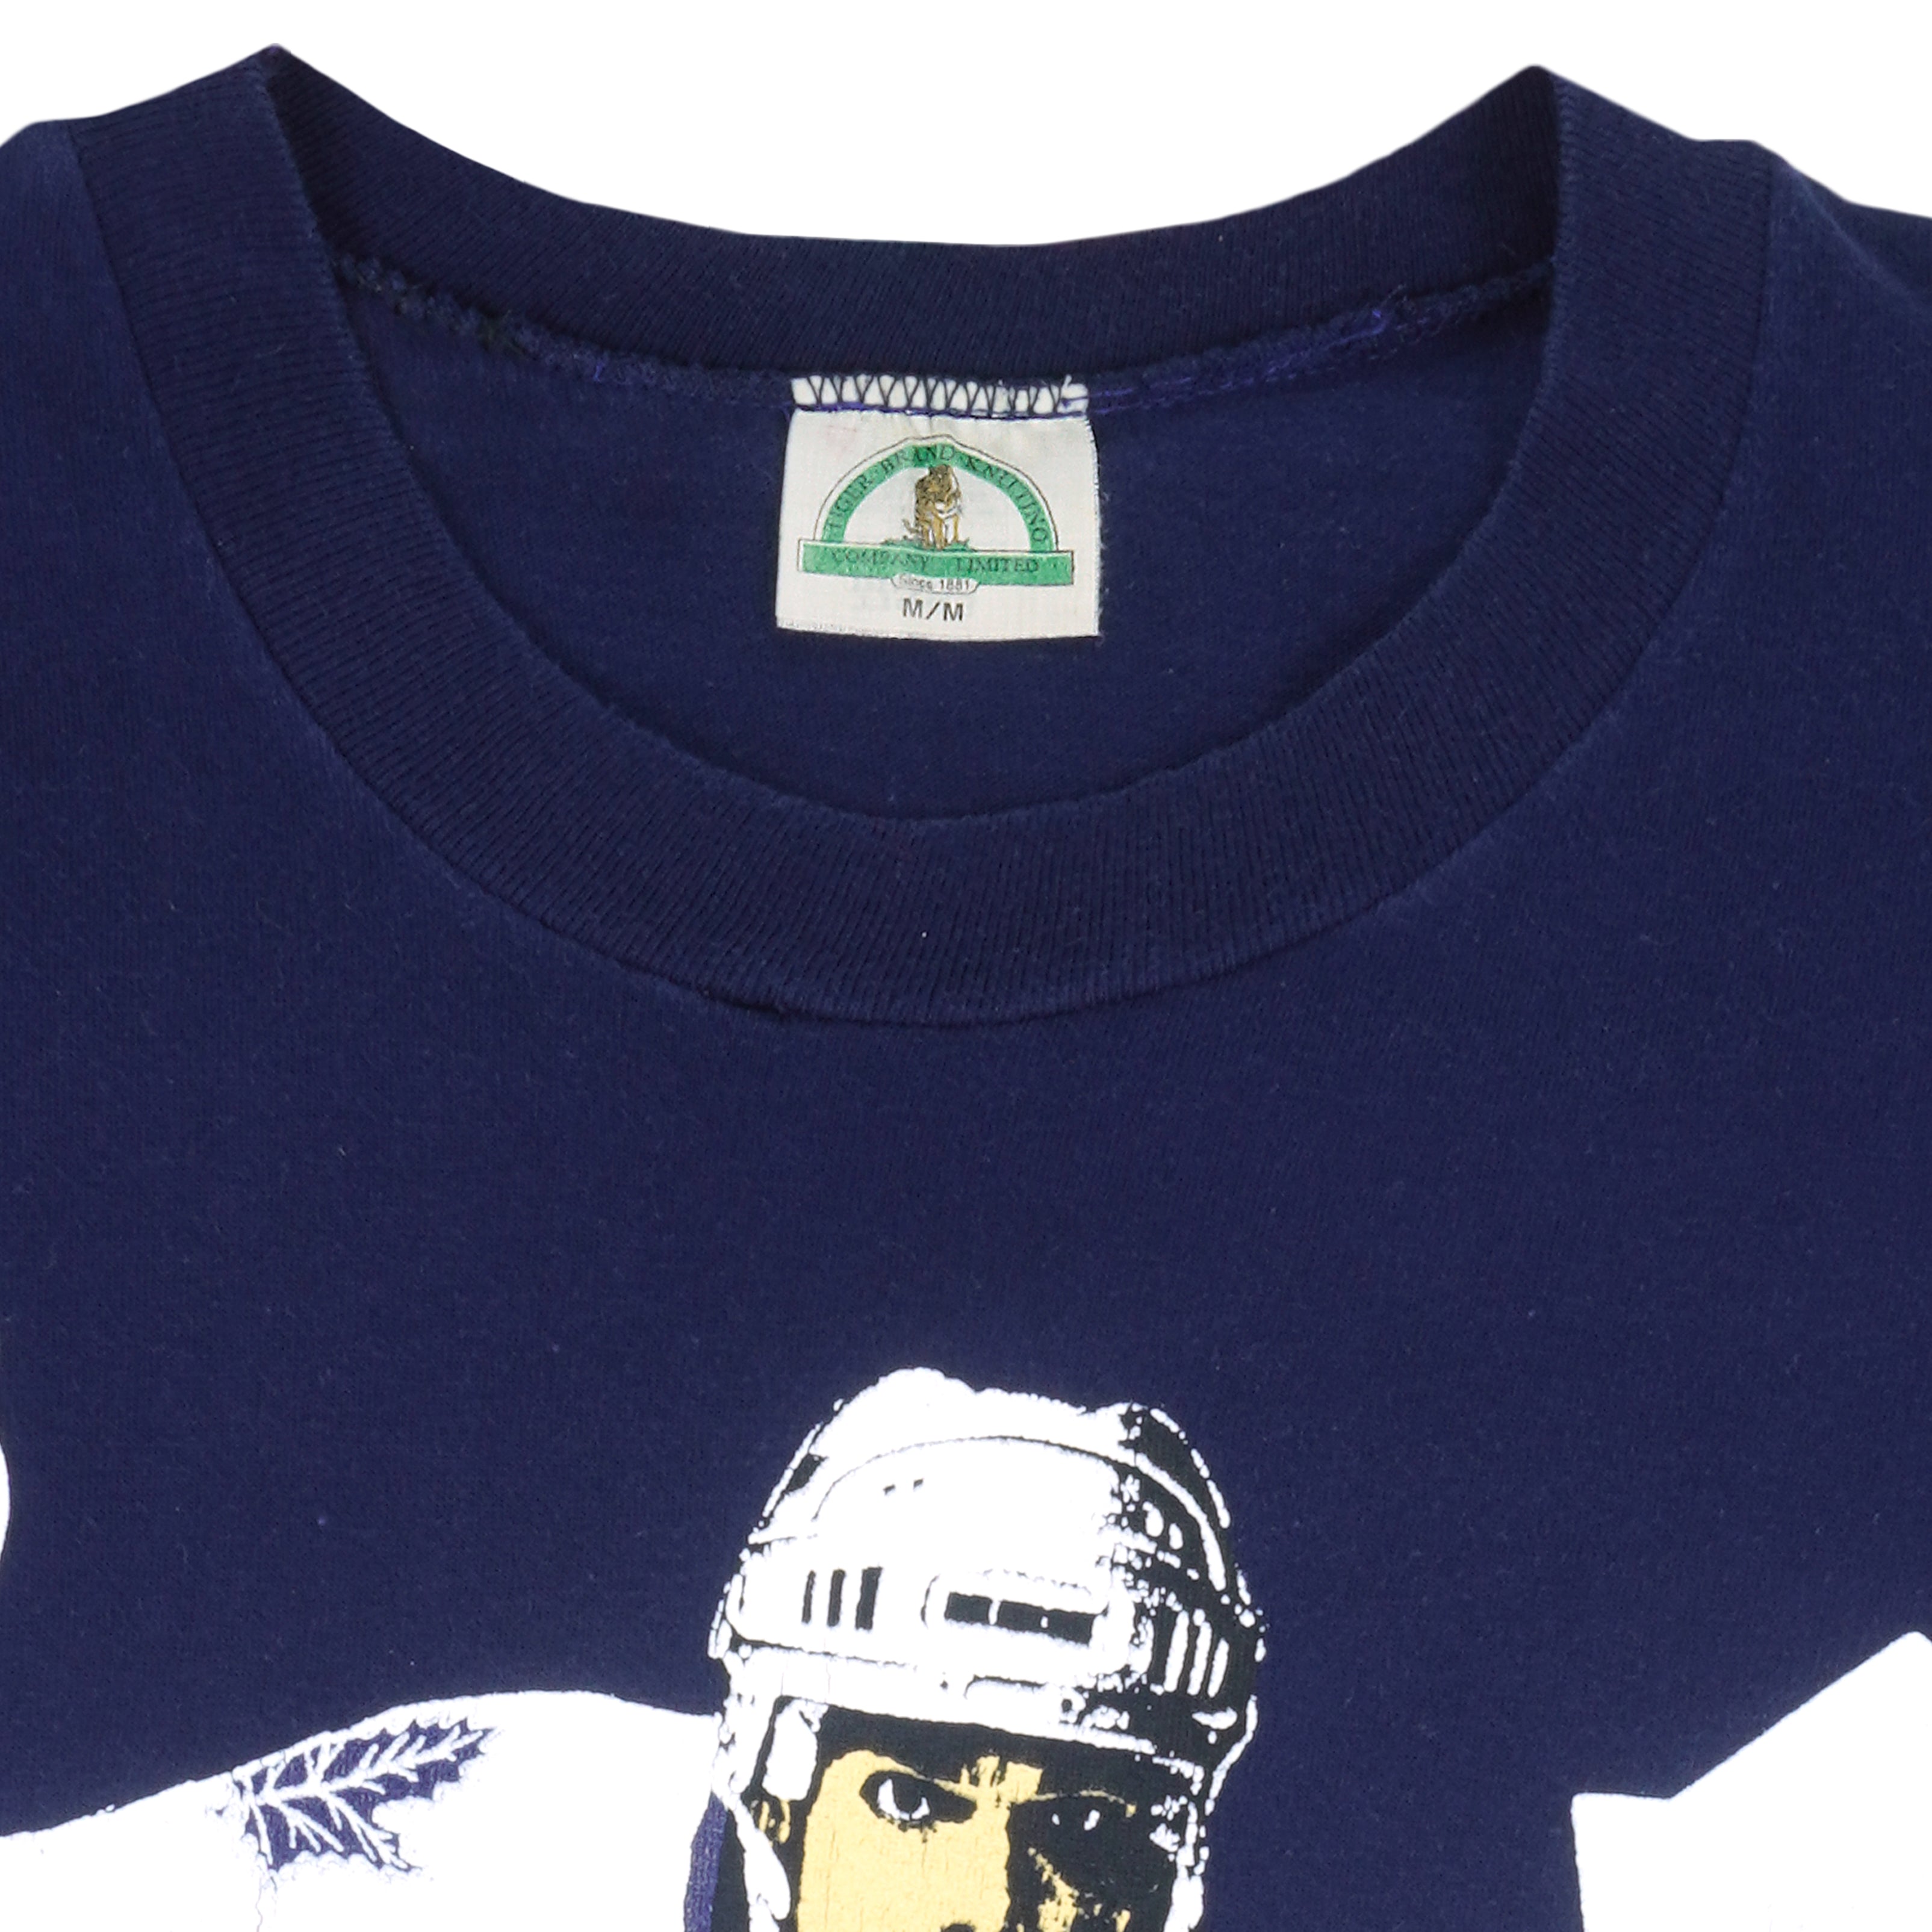 Vintage Toronto Maple Leafs Pro Player Sewn NHL Hockey Jersey 